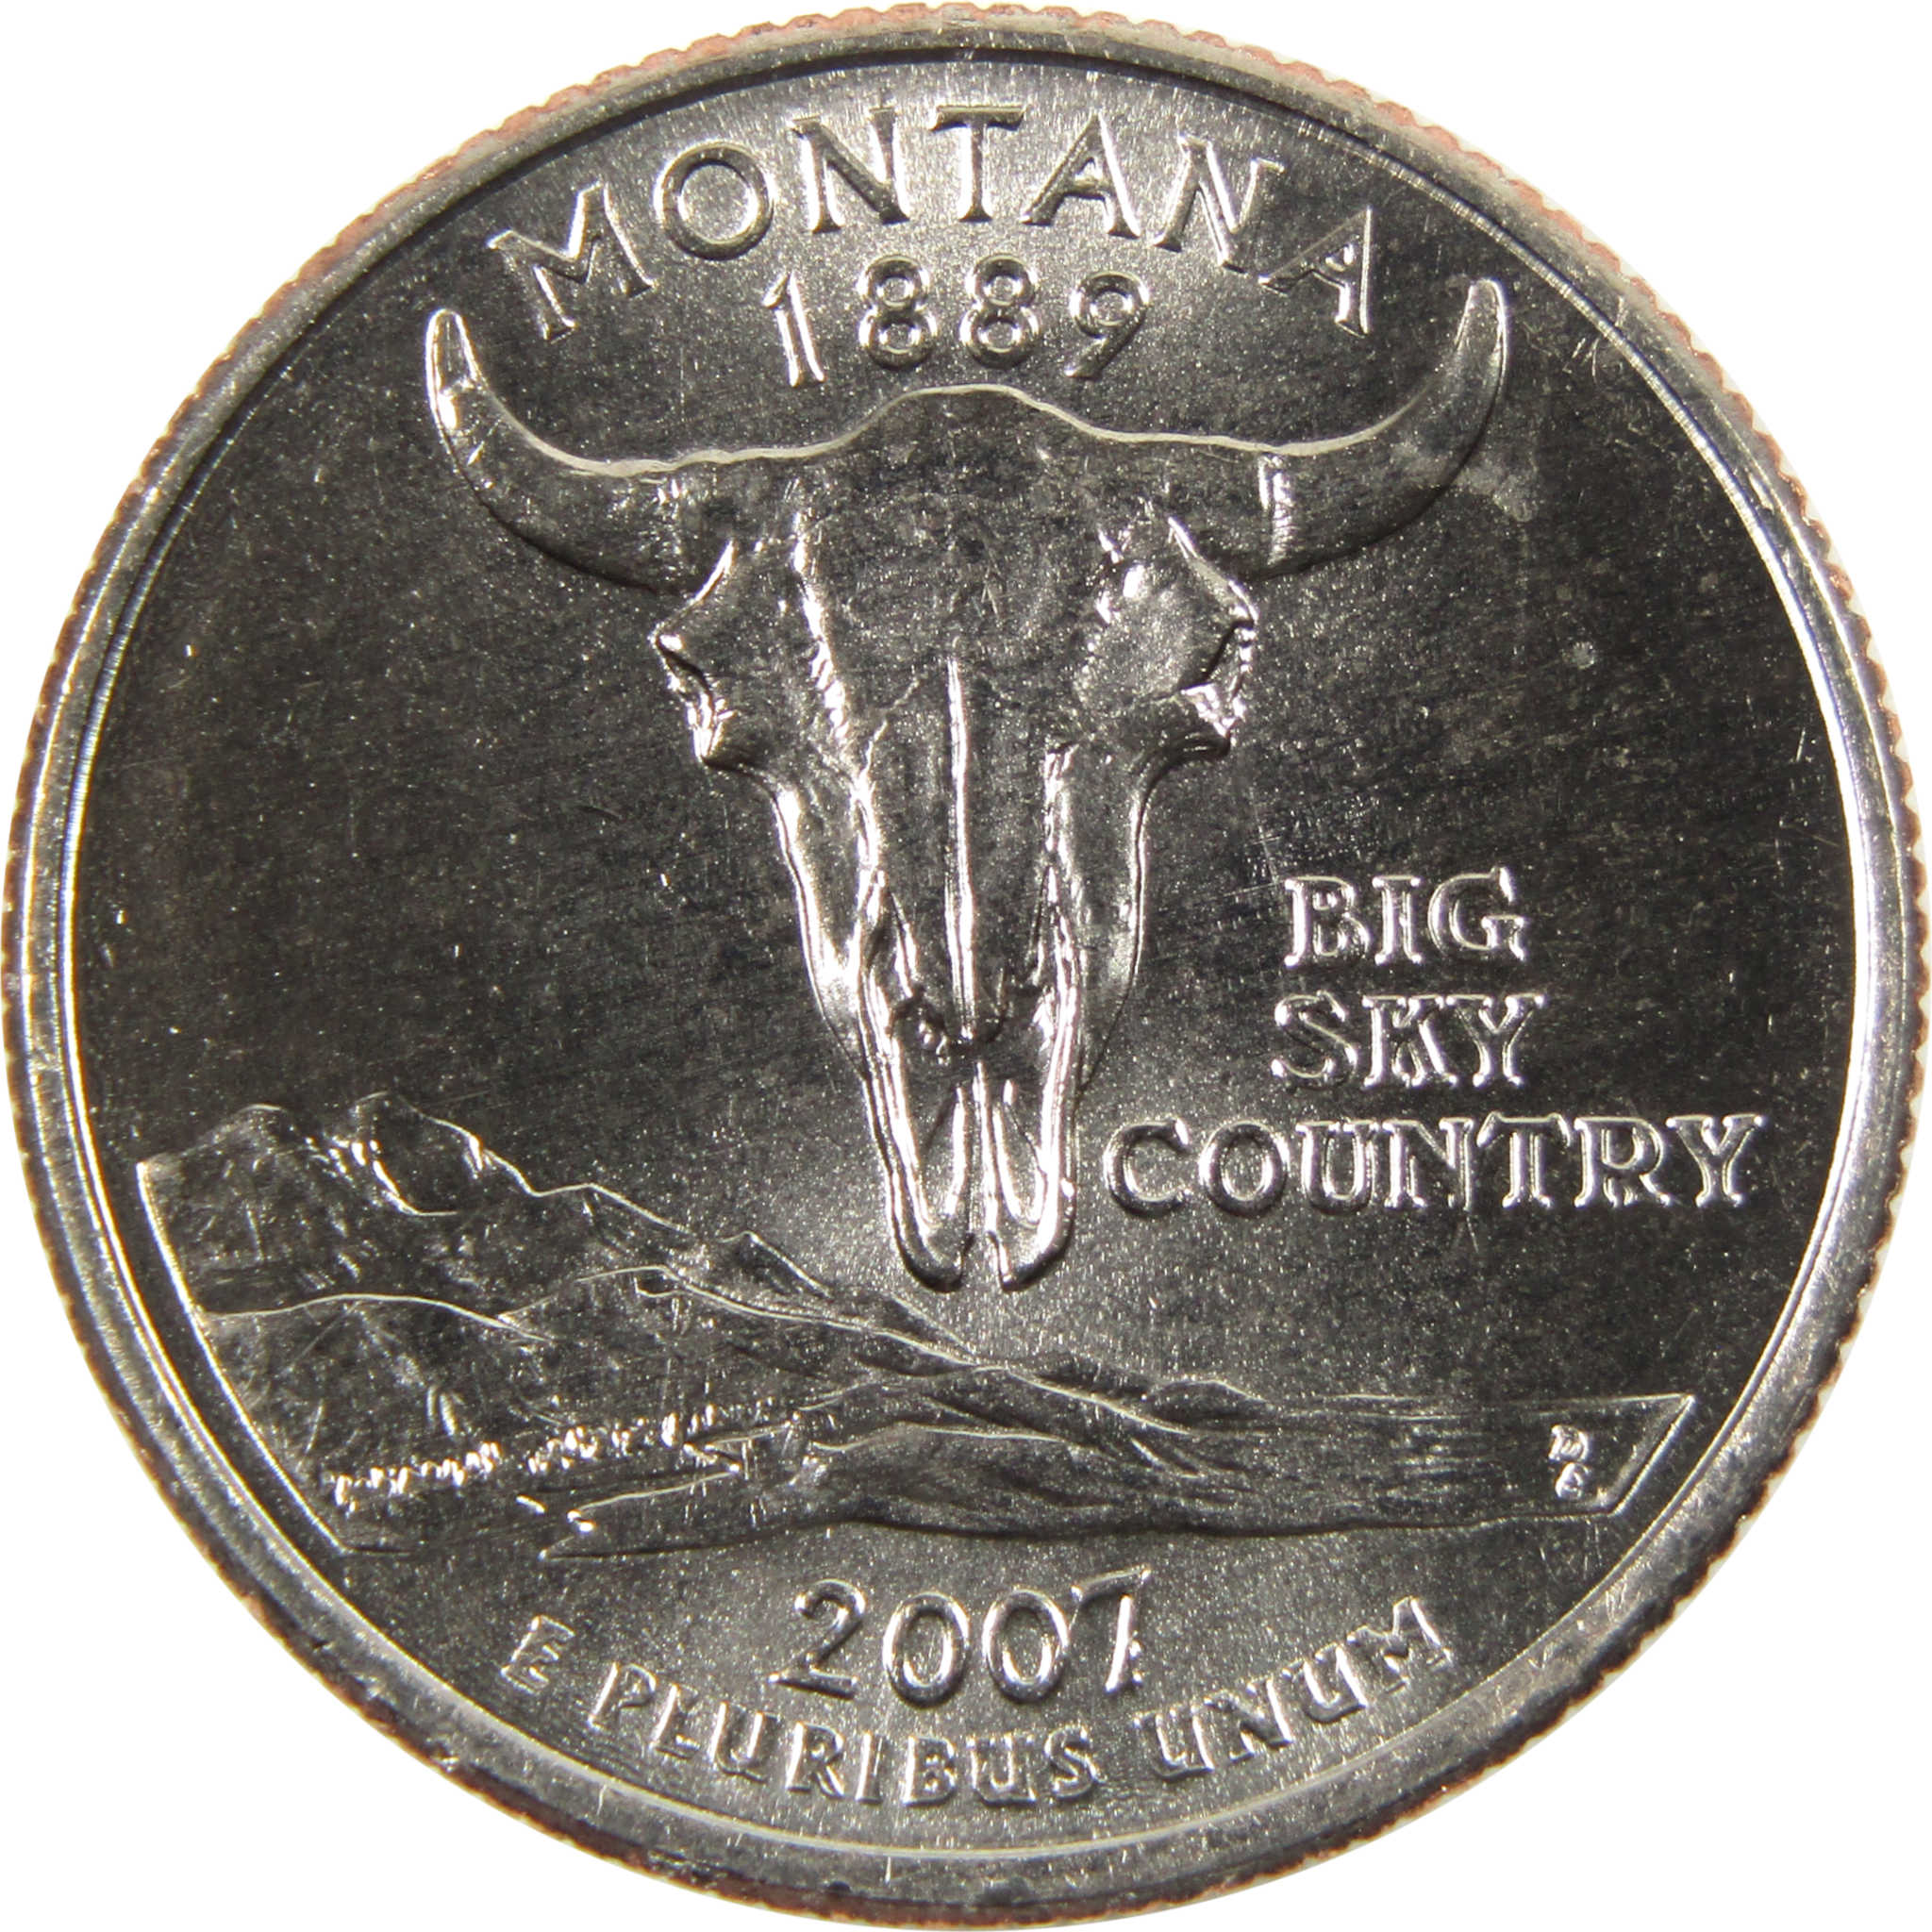 2007 D Montana State Quarter BU Uncirculated Clad 25c Coin